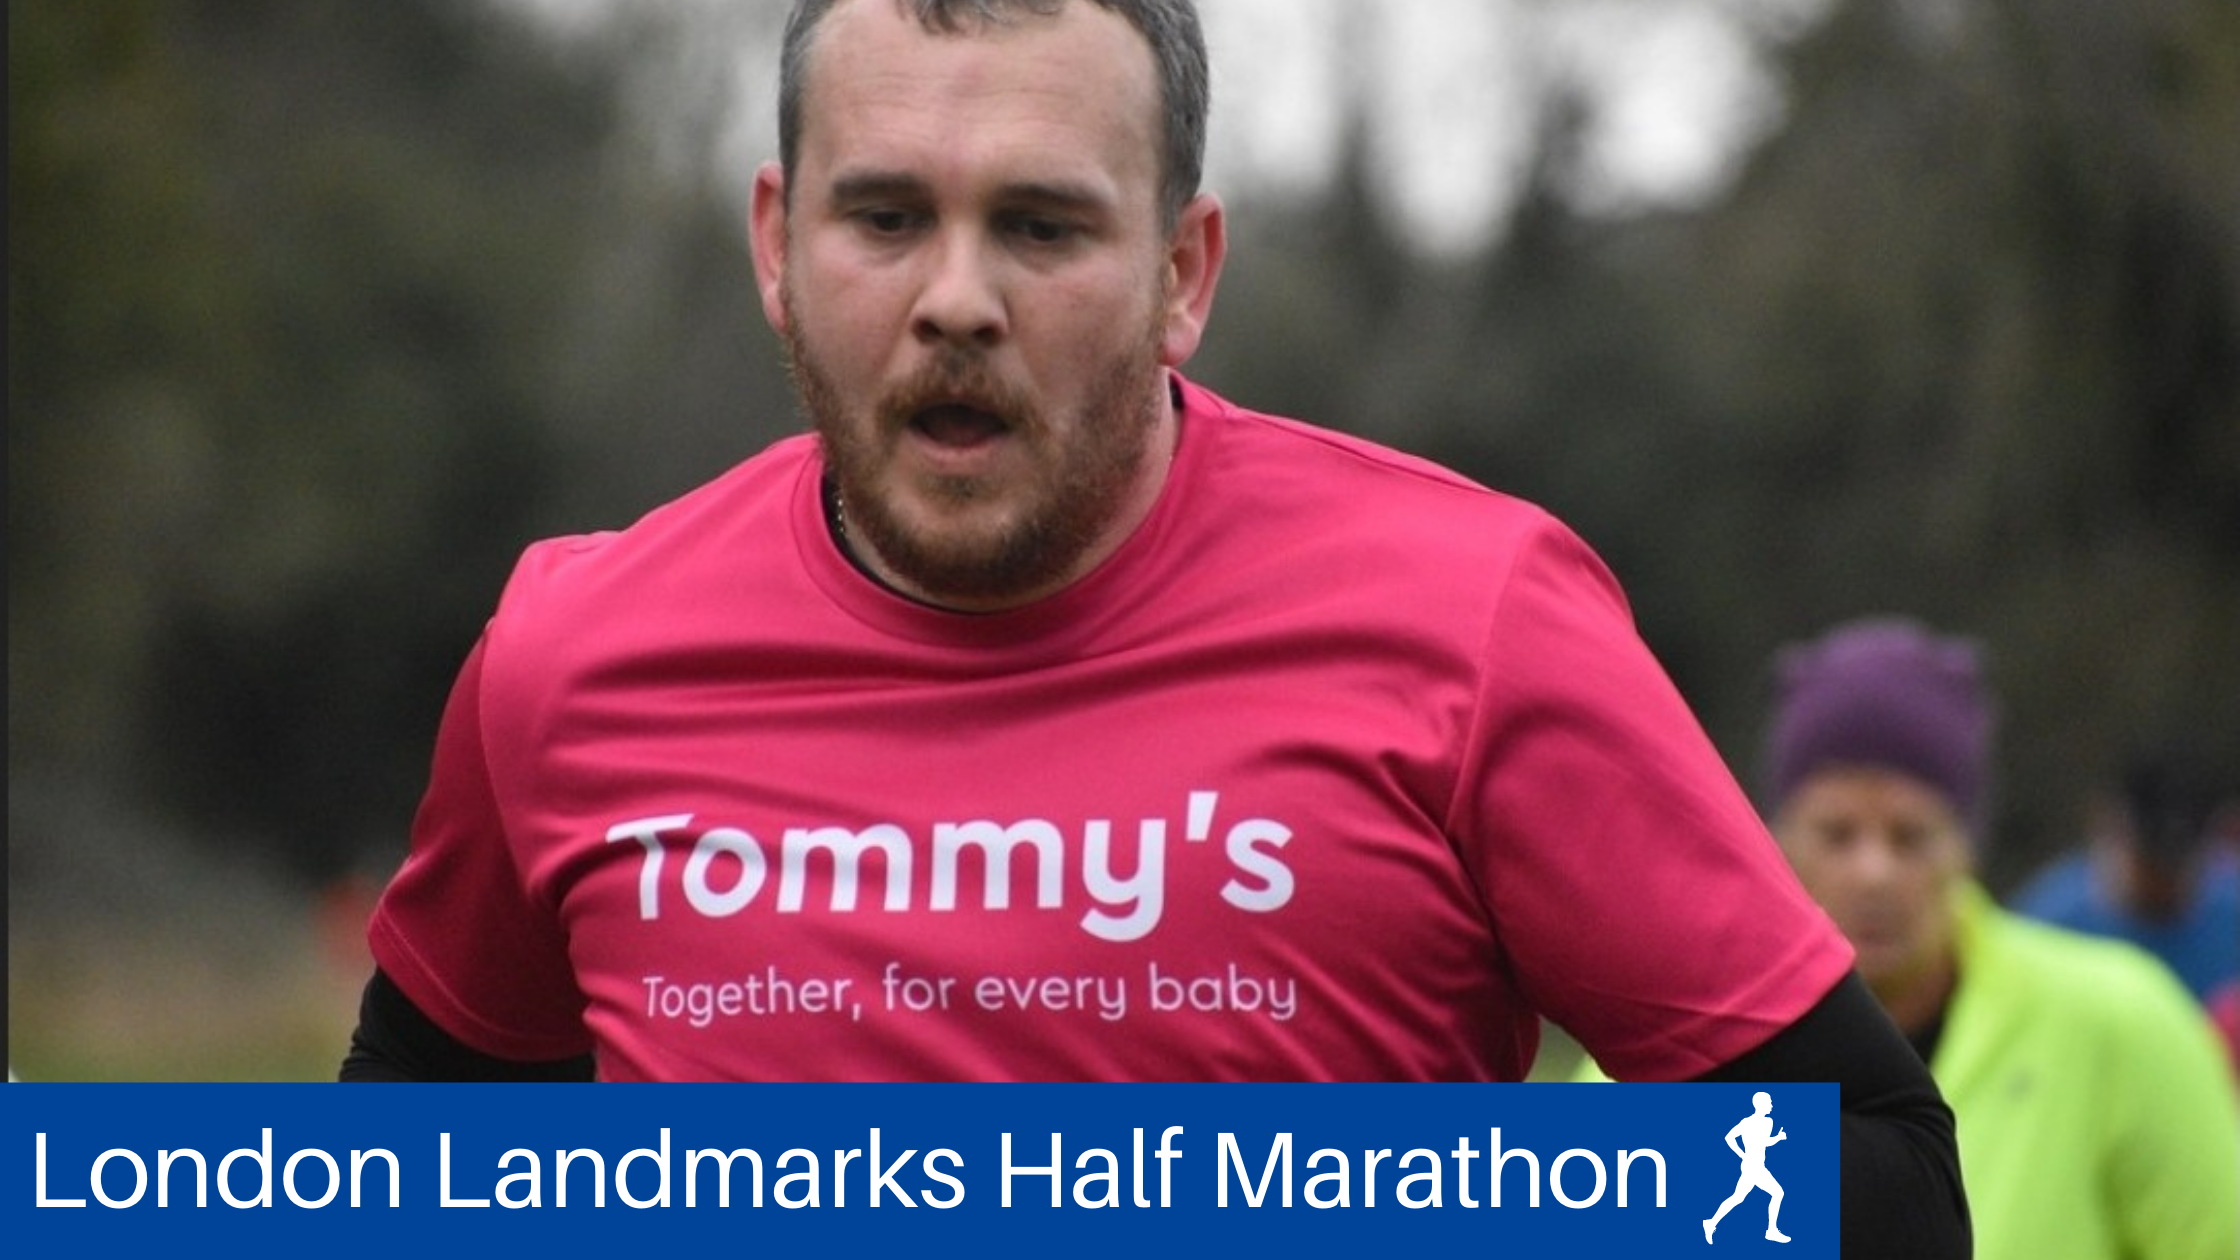 Adam Doe running in the London Landmarks Half Marathon